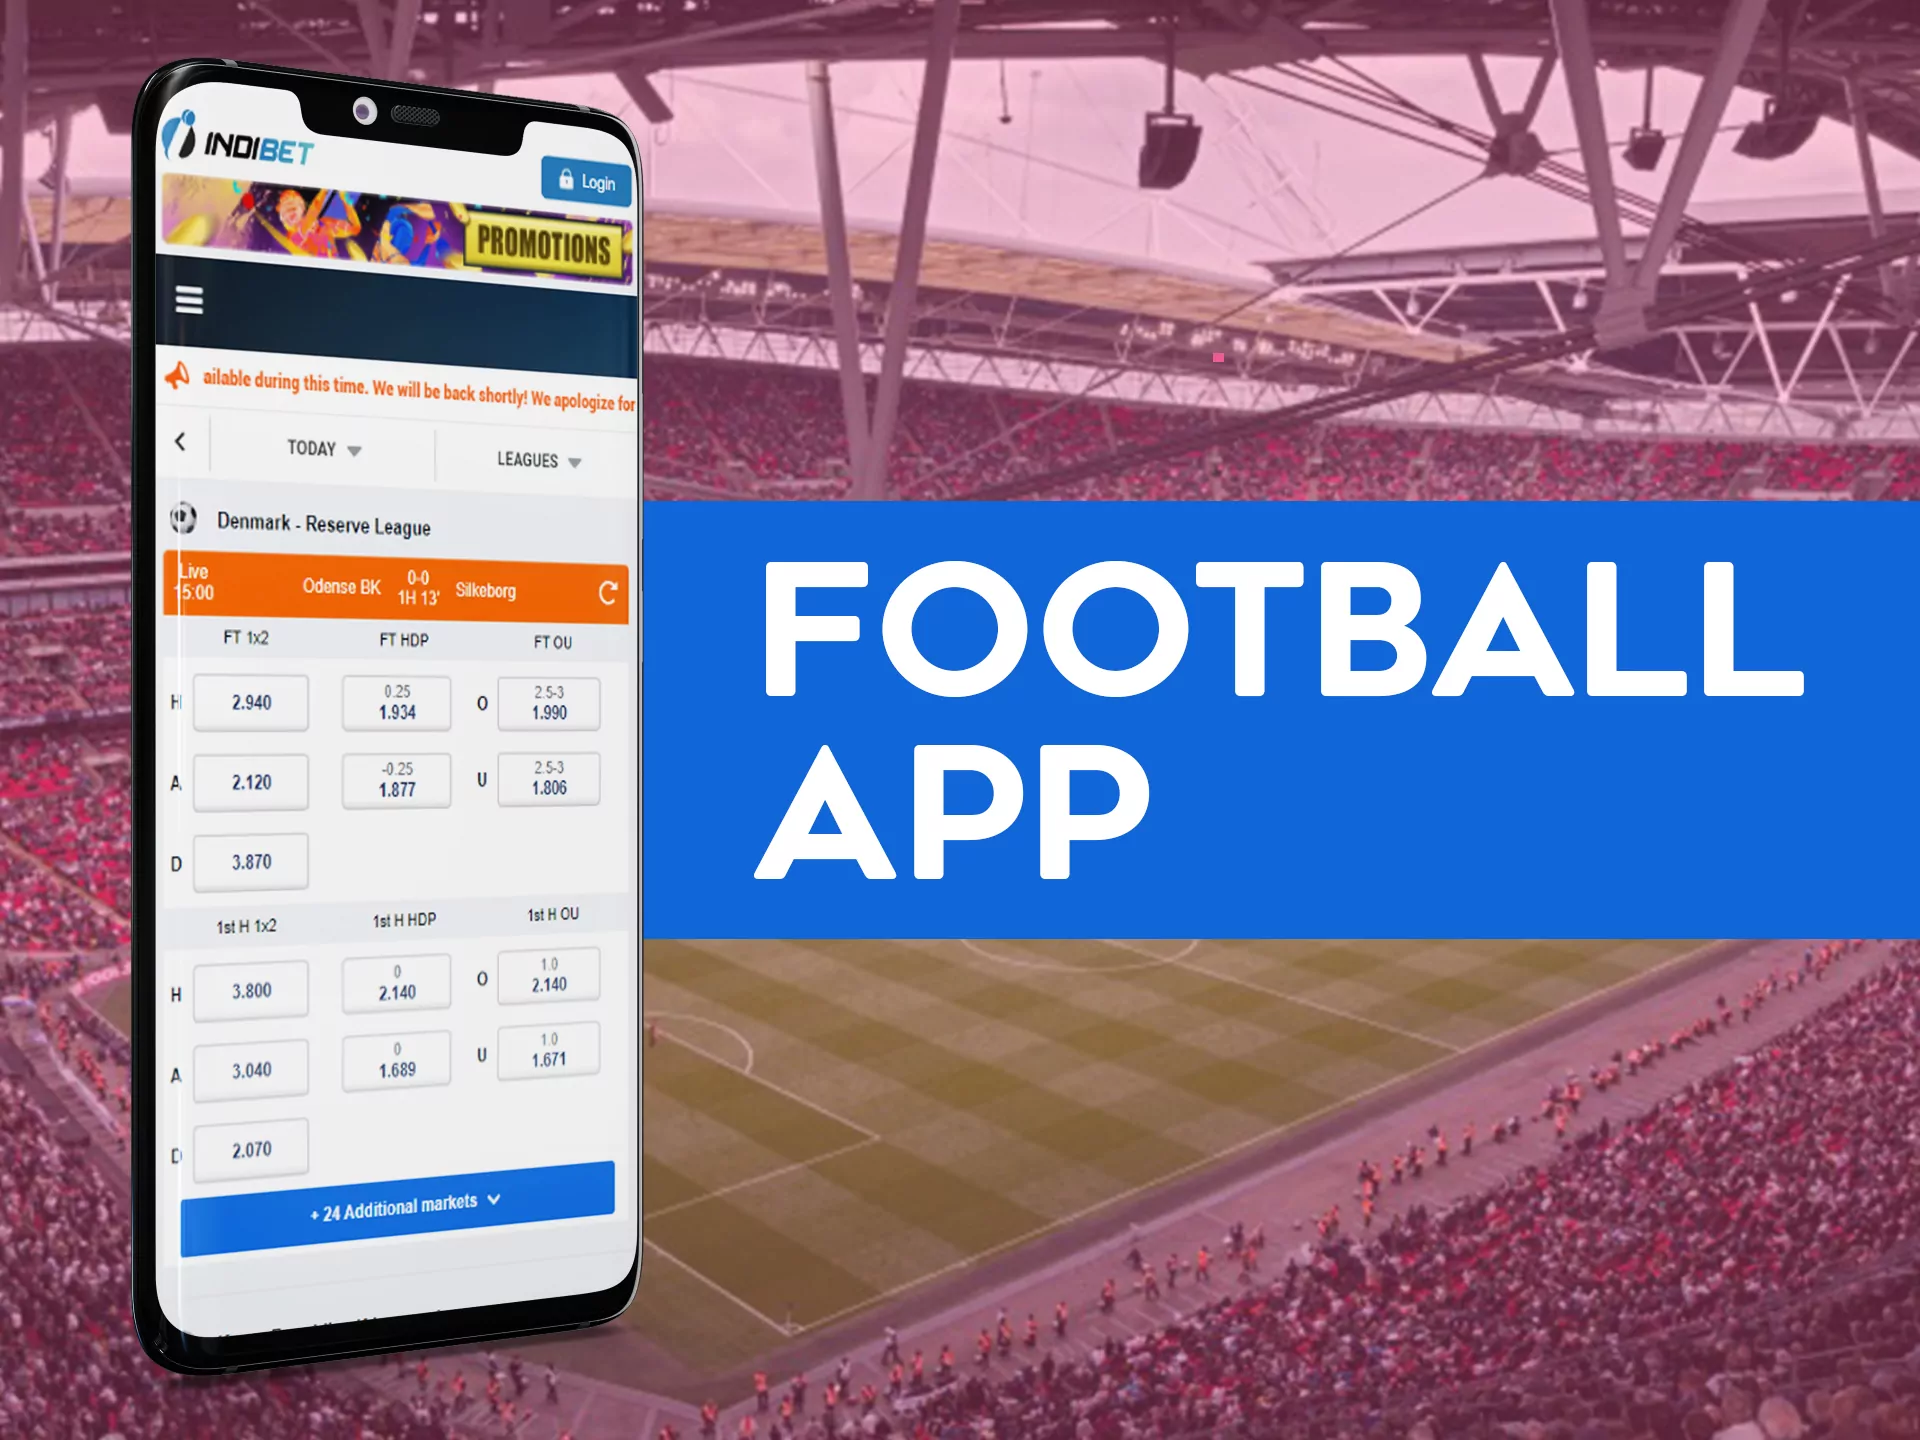 Indibet app allows betting on football.